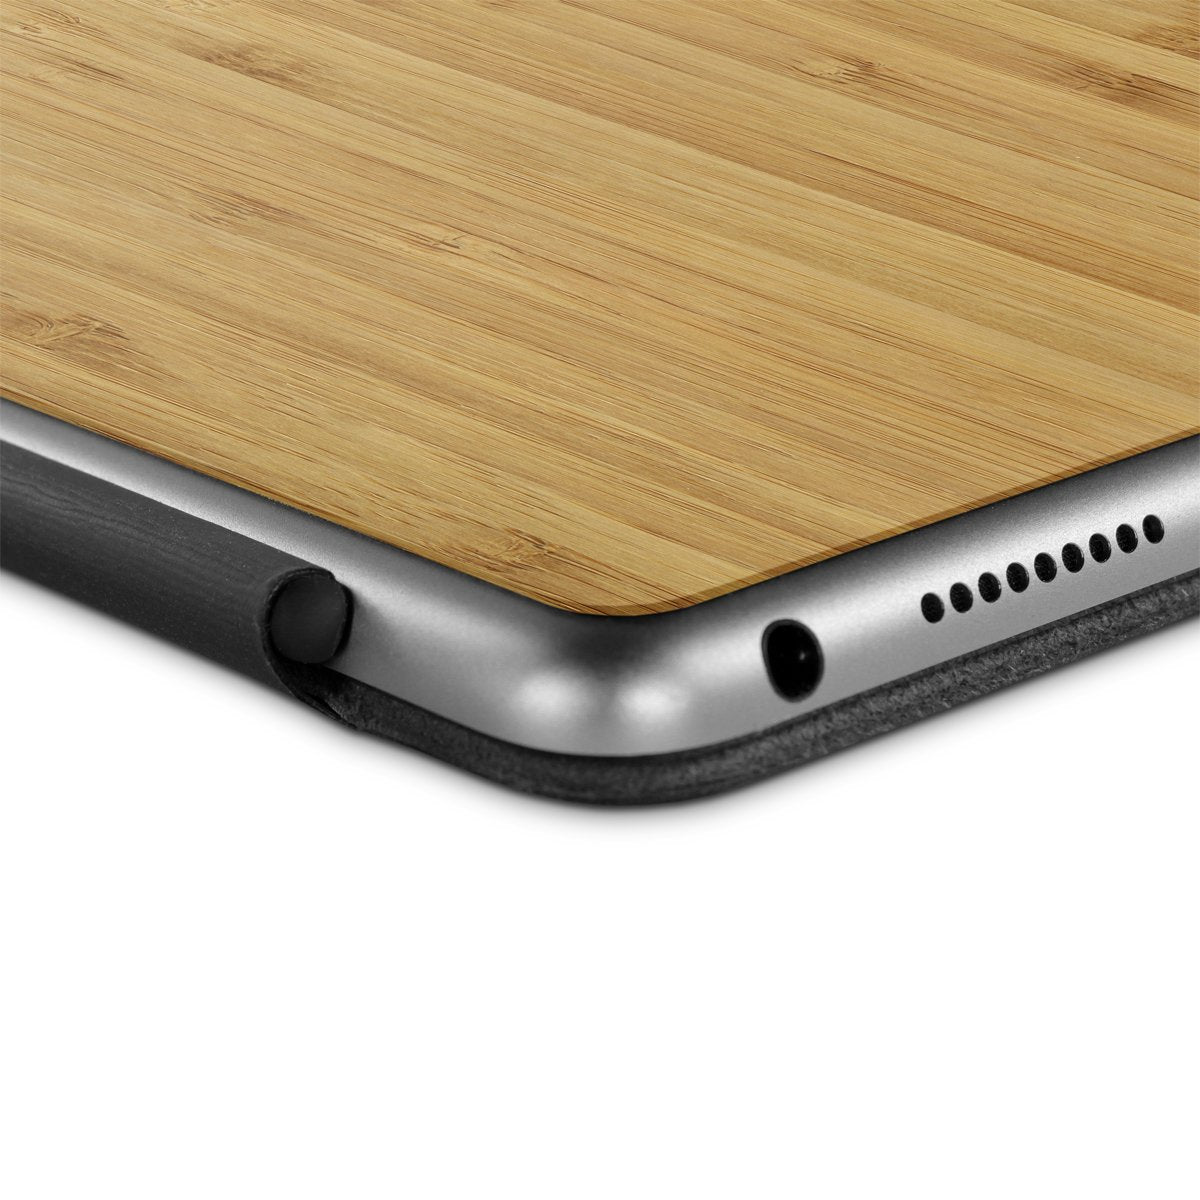 iPad Pro 11-inch — #WoodBack Skin